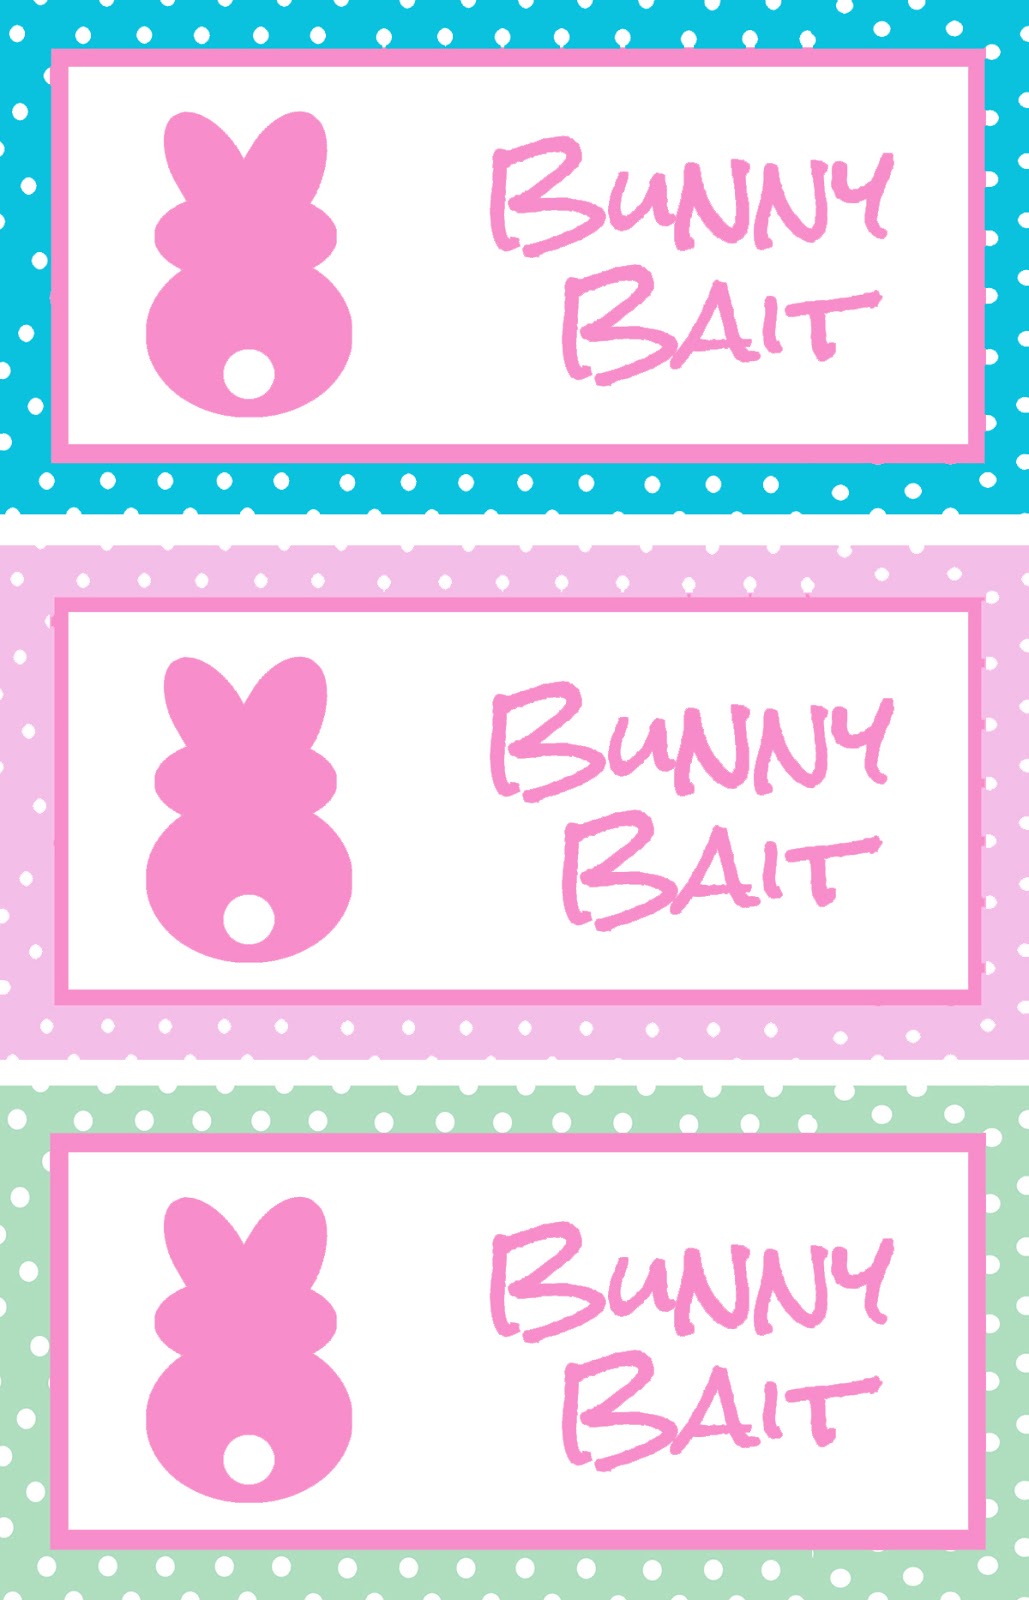 Crafting E Bunny Bait